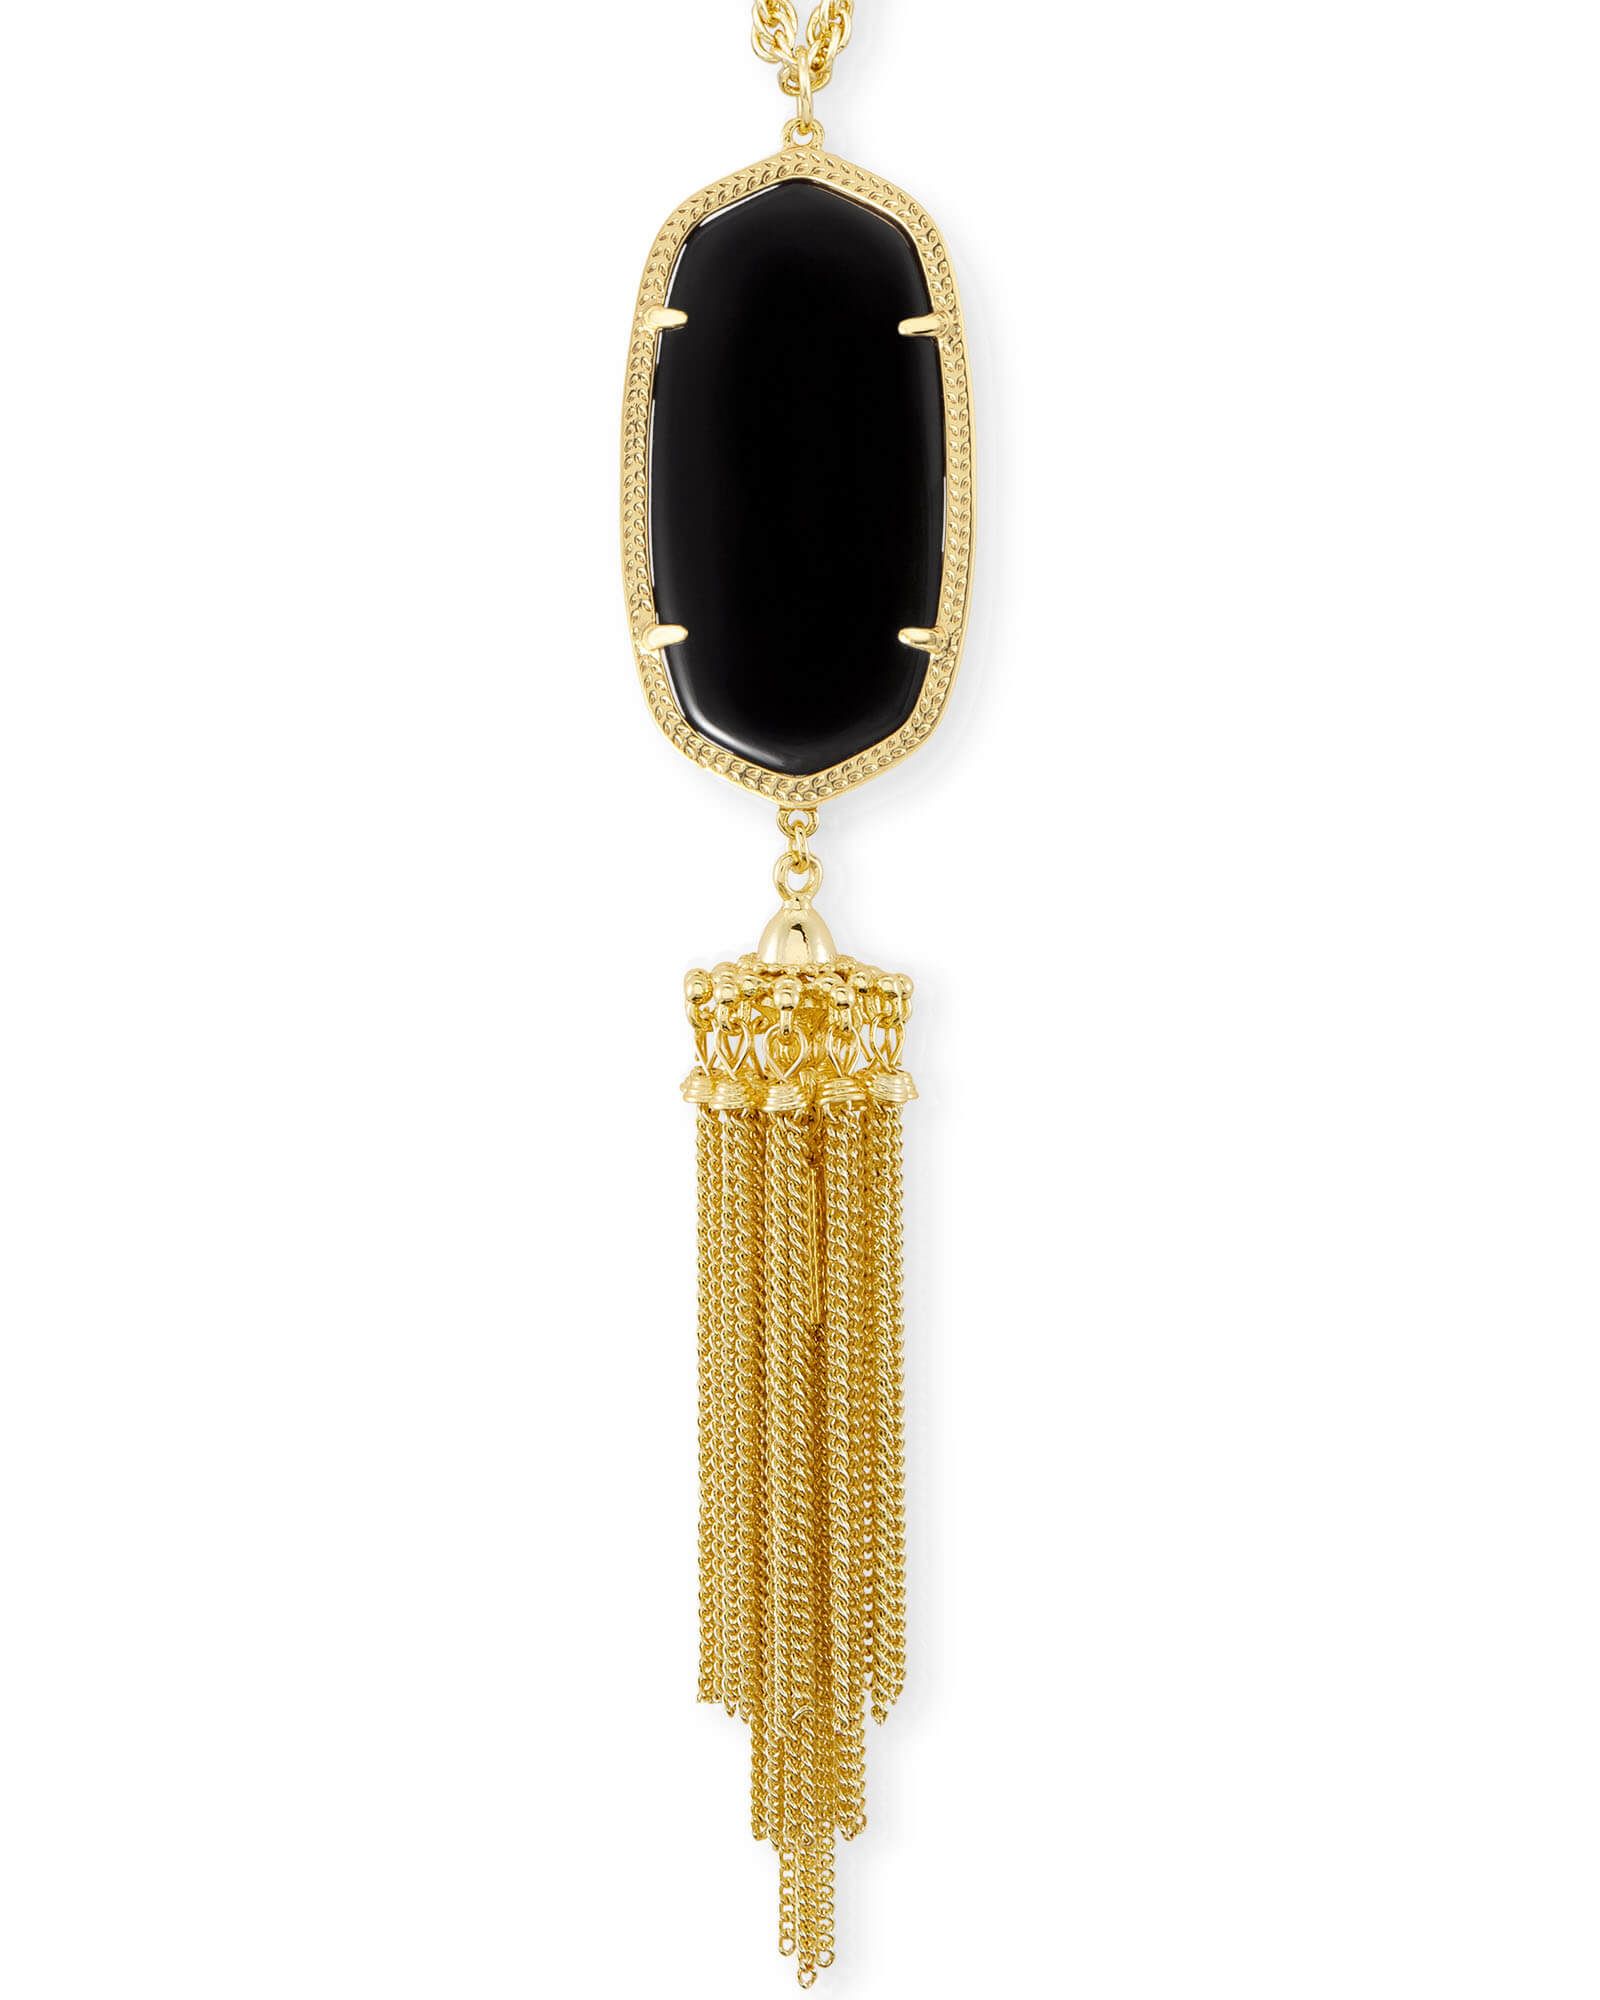 Rayne Necklace in Black | Kendra Scott